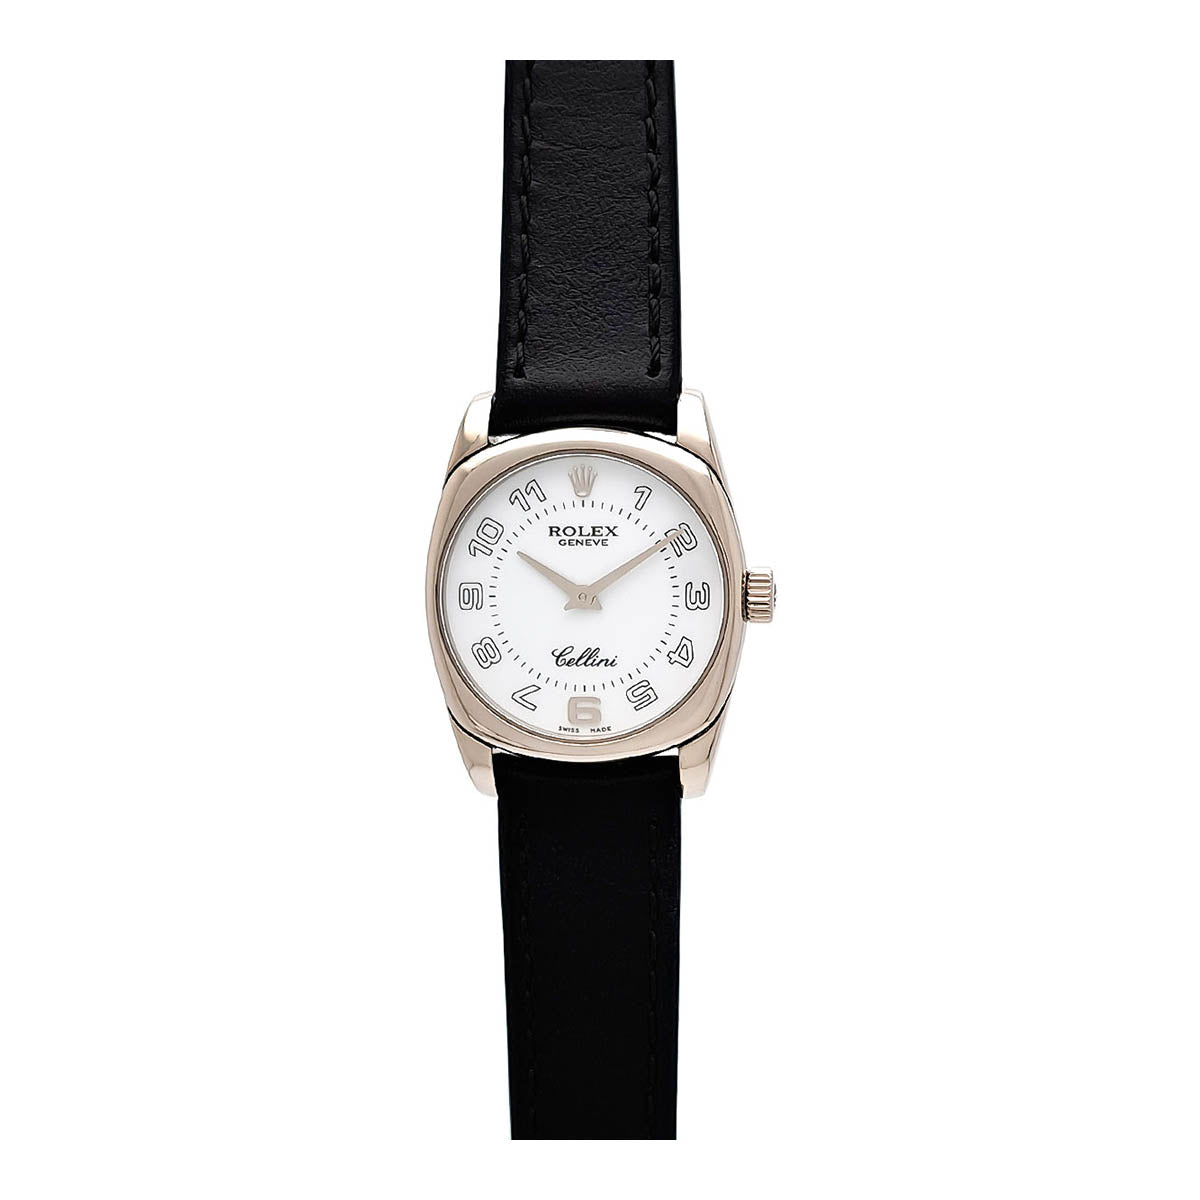 Quartz Cellini Danaos Wrist Watch  6229.0